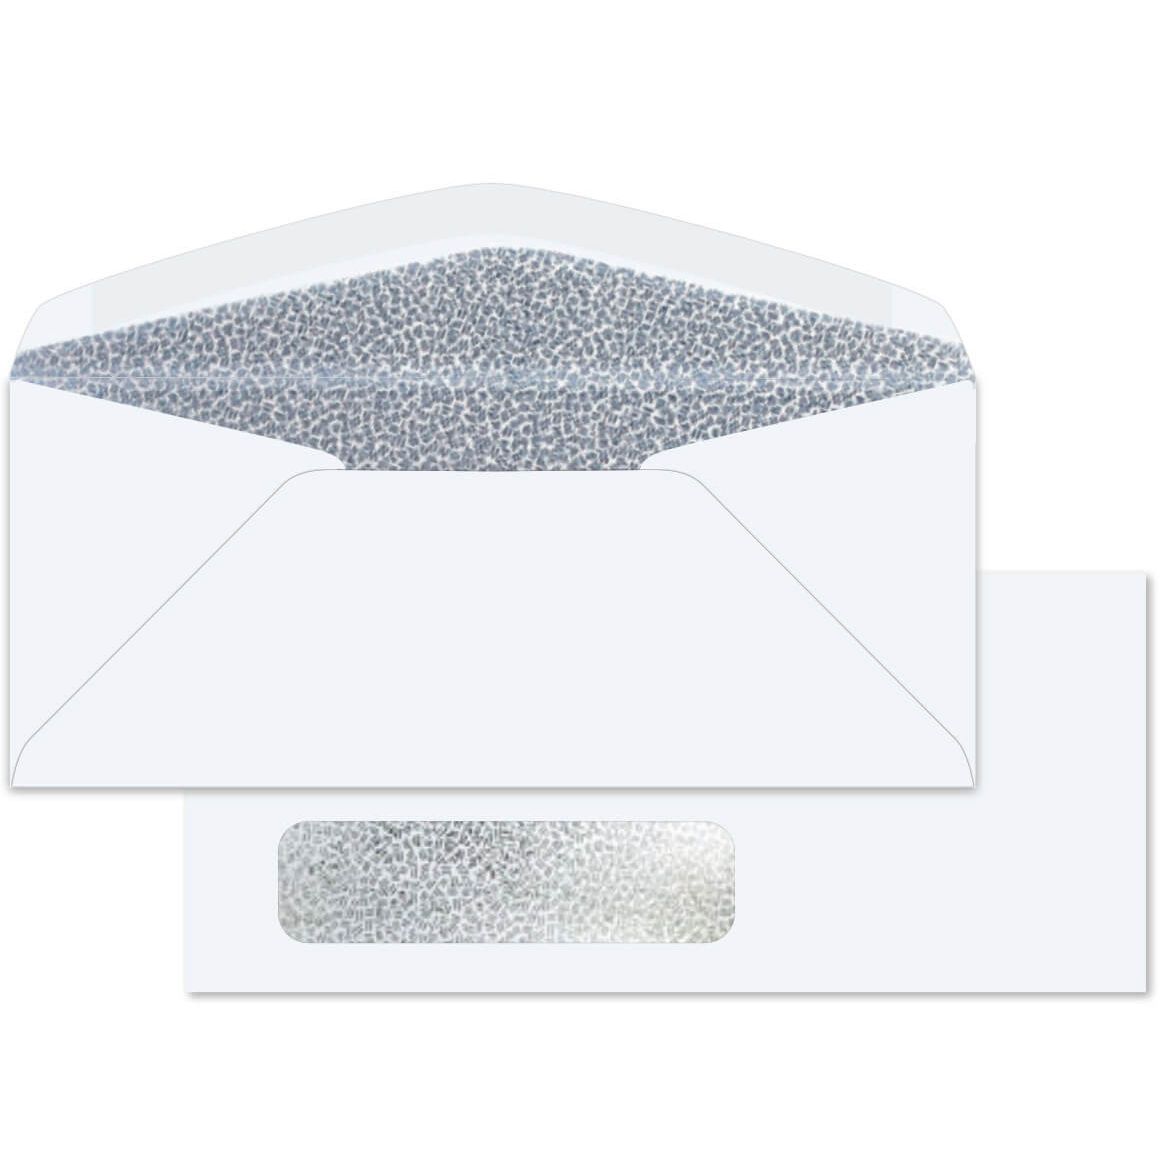 Printmaster® White Wove 24 lb. Standard No. 10 Window Black Tint Envelopes 500 per Box